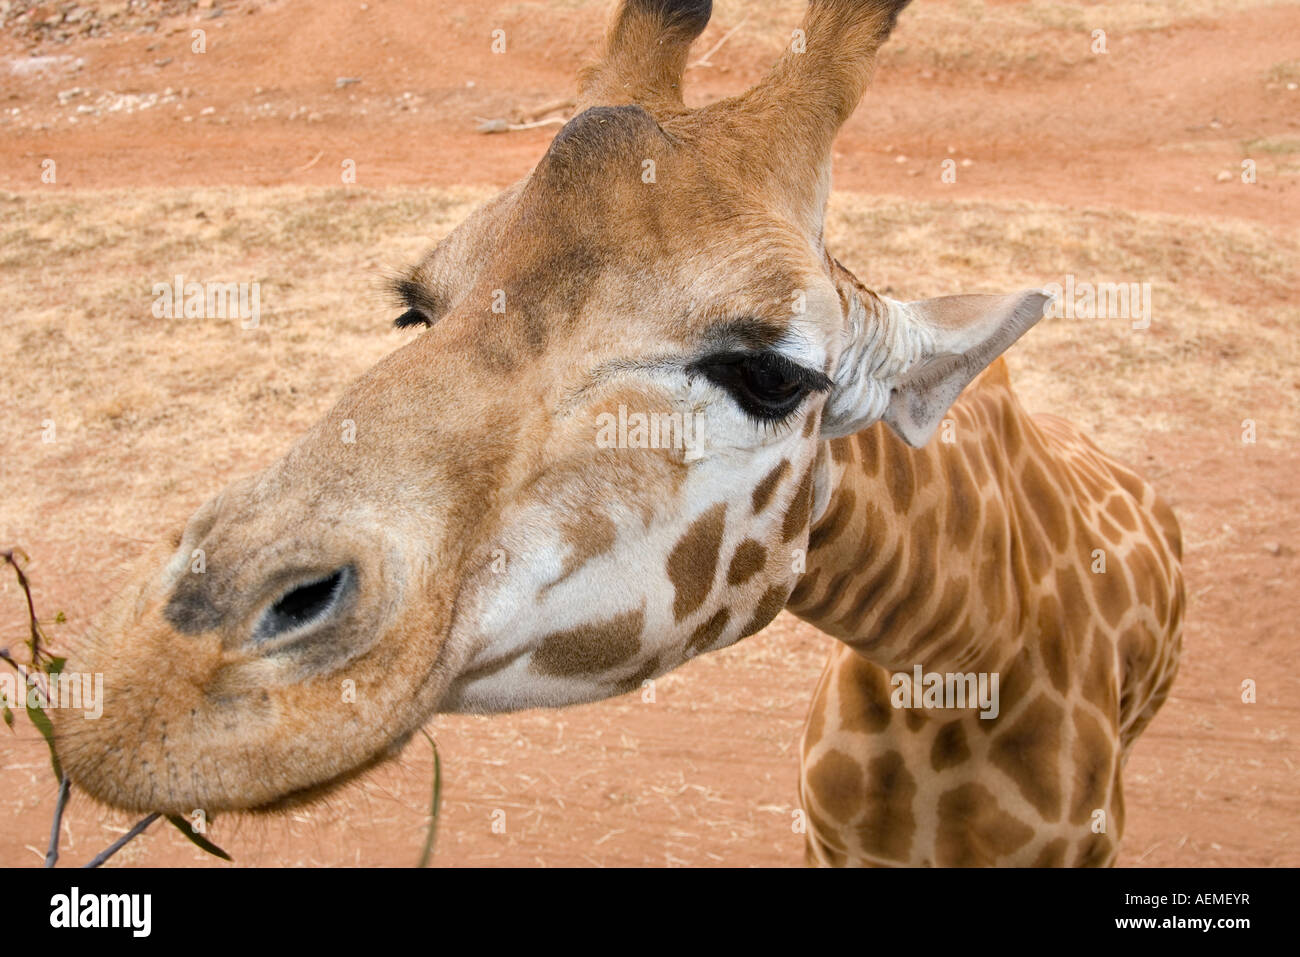 close up image of a nice tall giraffe Stock Photo